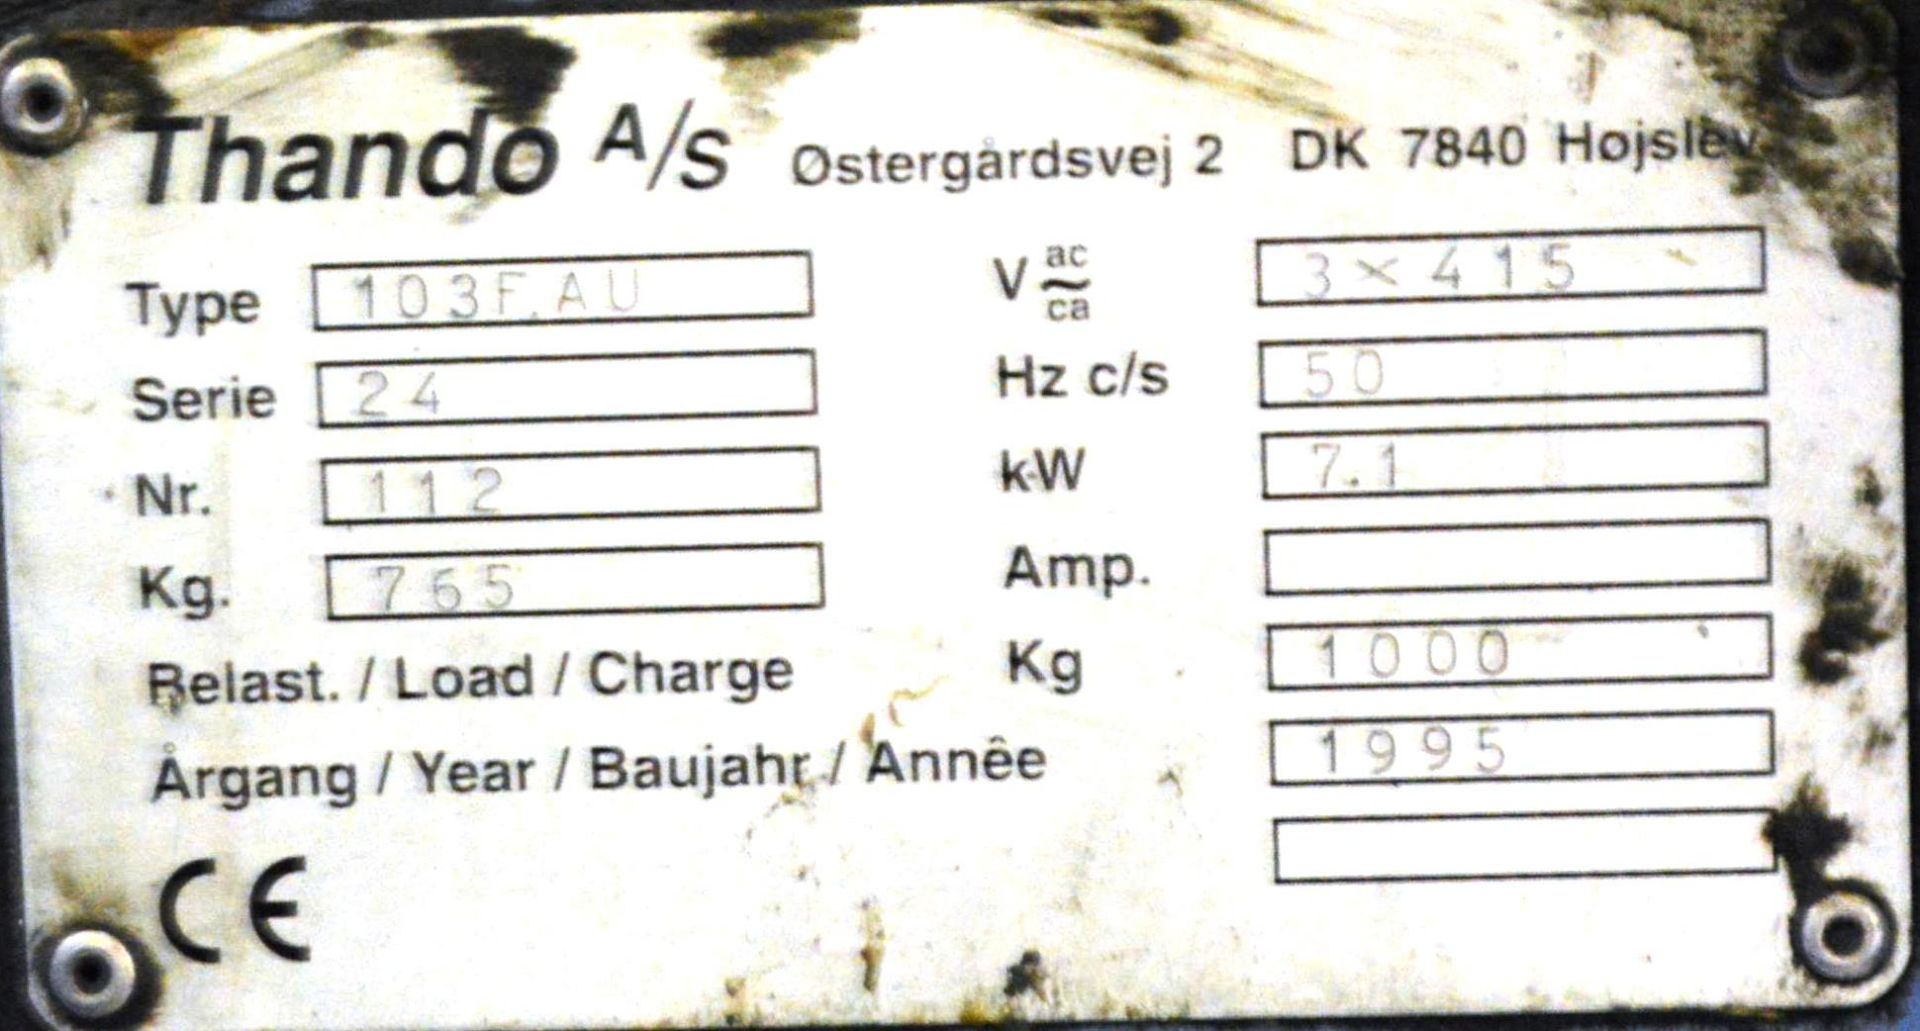 Thando 103F.AU B1 PILE TURNER, serial no. 24, nr112, 765kg, 3 x 415v, year of manufacture 1995 - Bild 5 aus 5